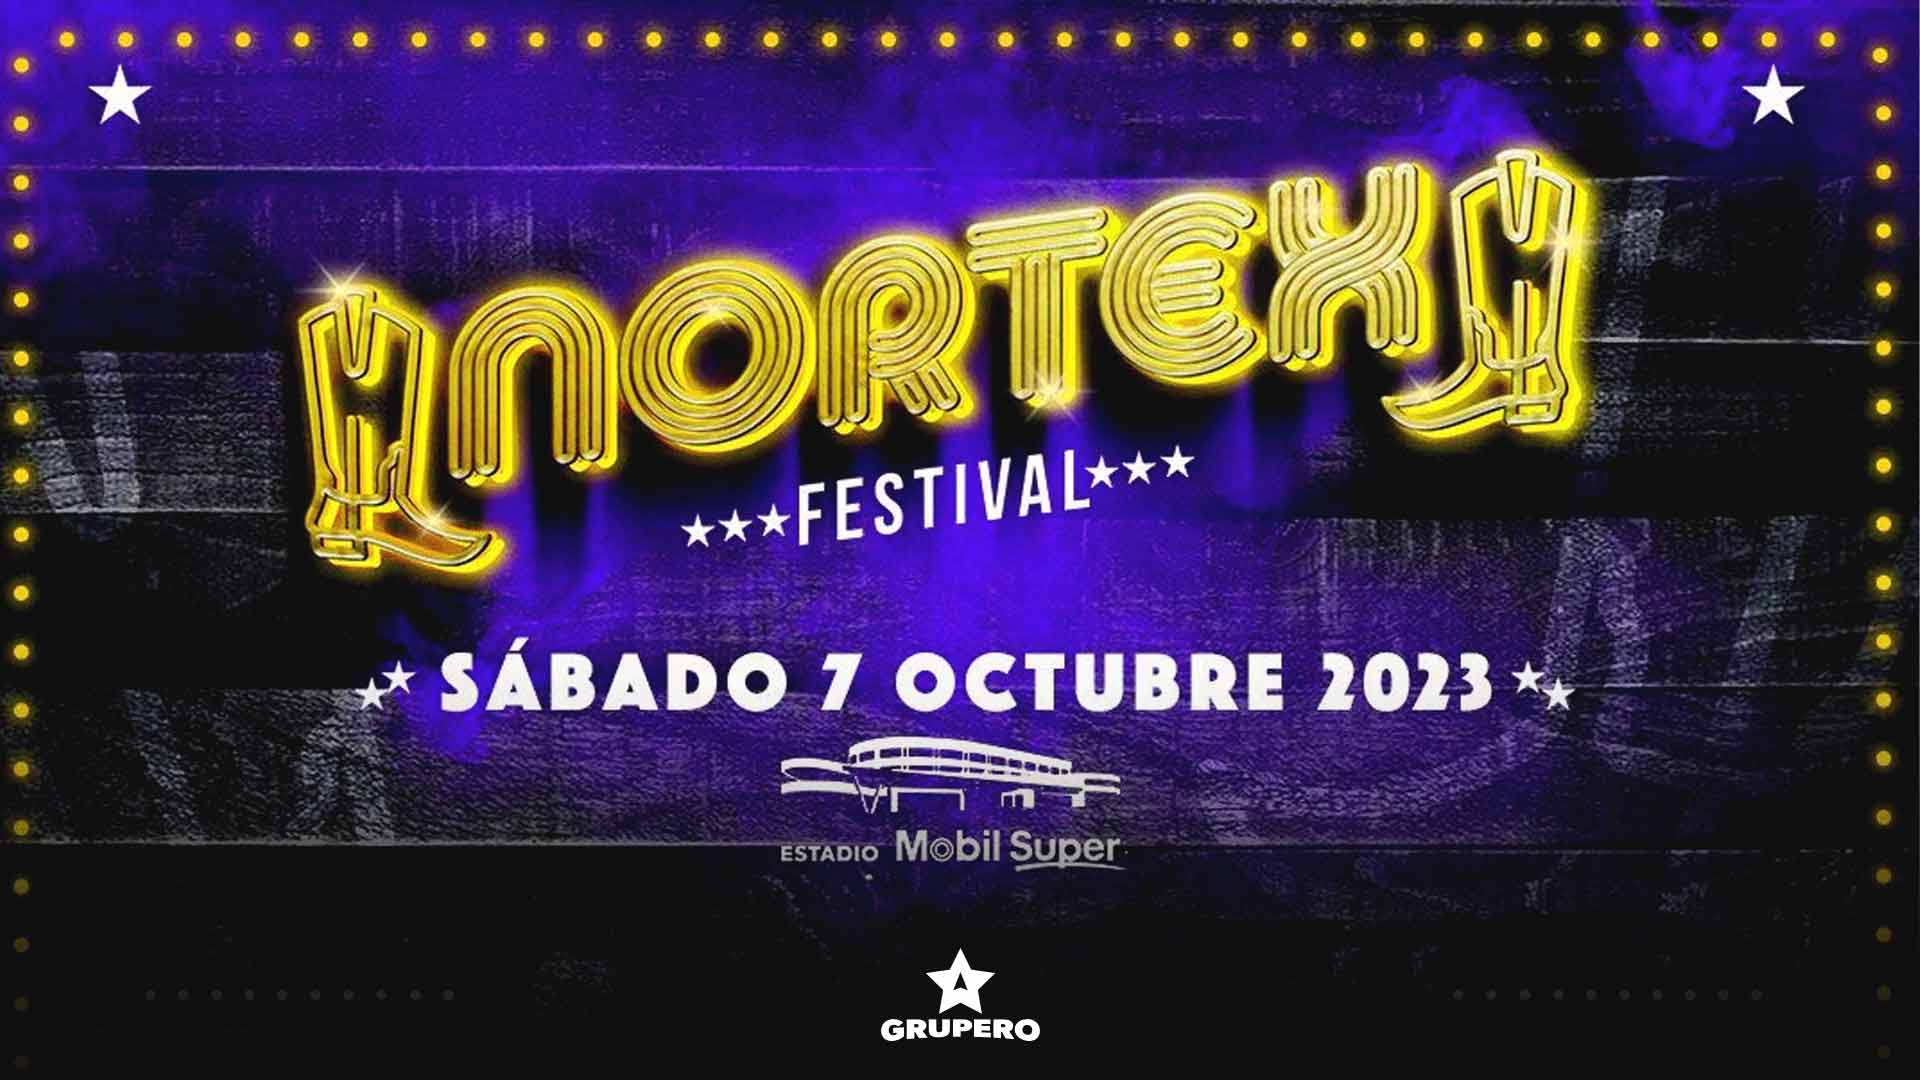 Festival Nortex 2023